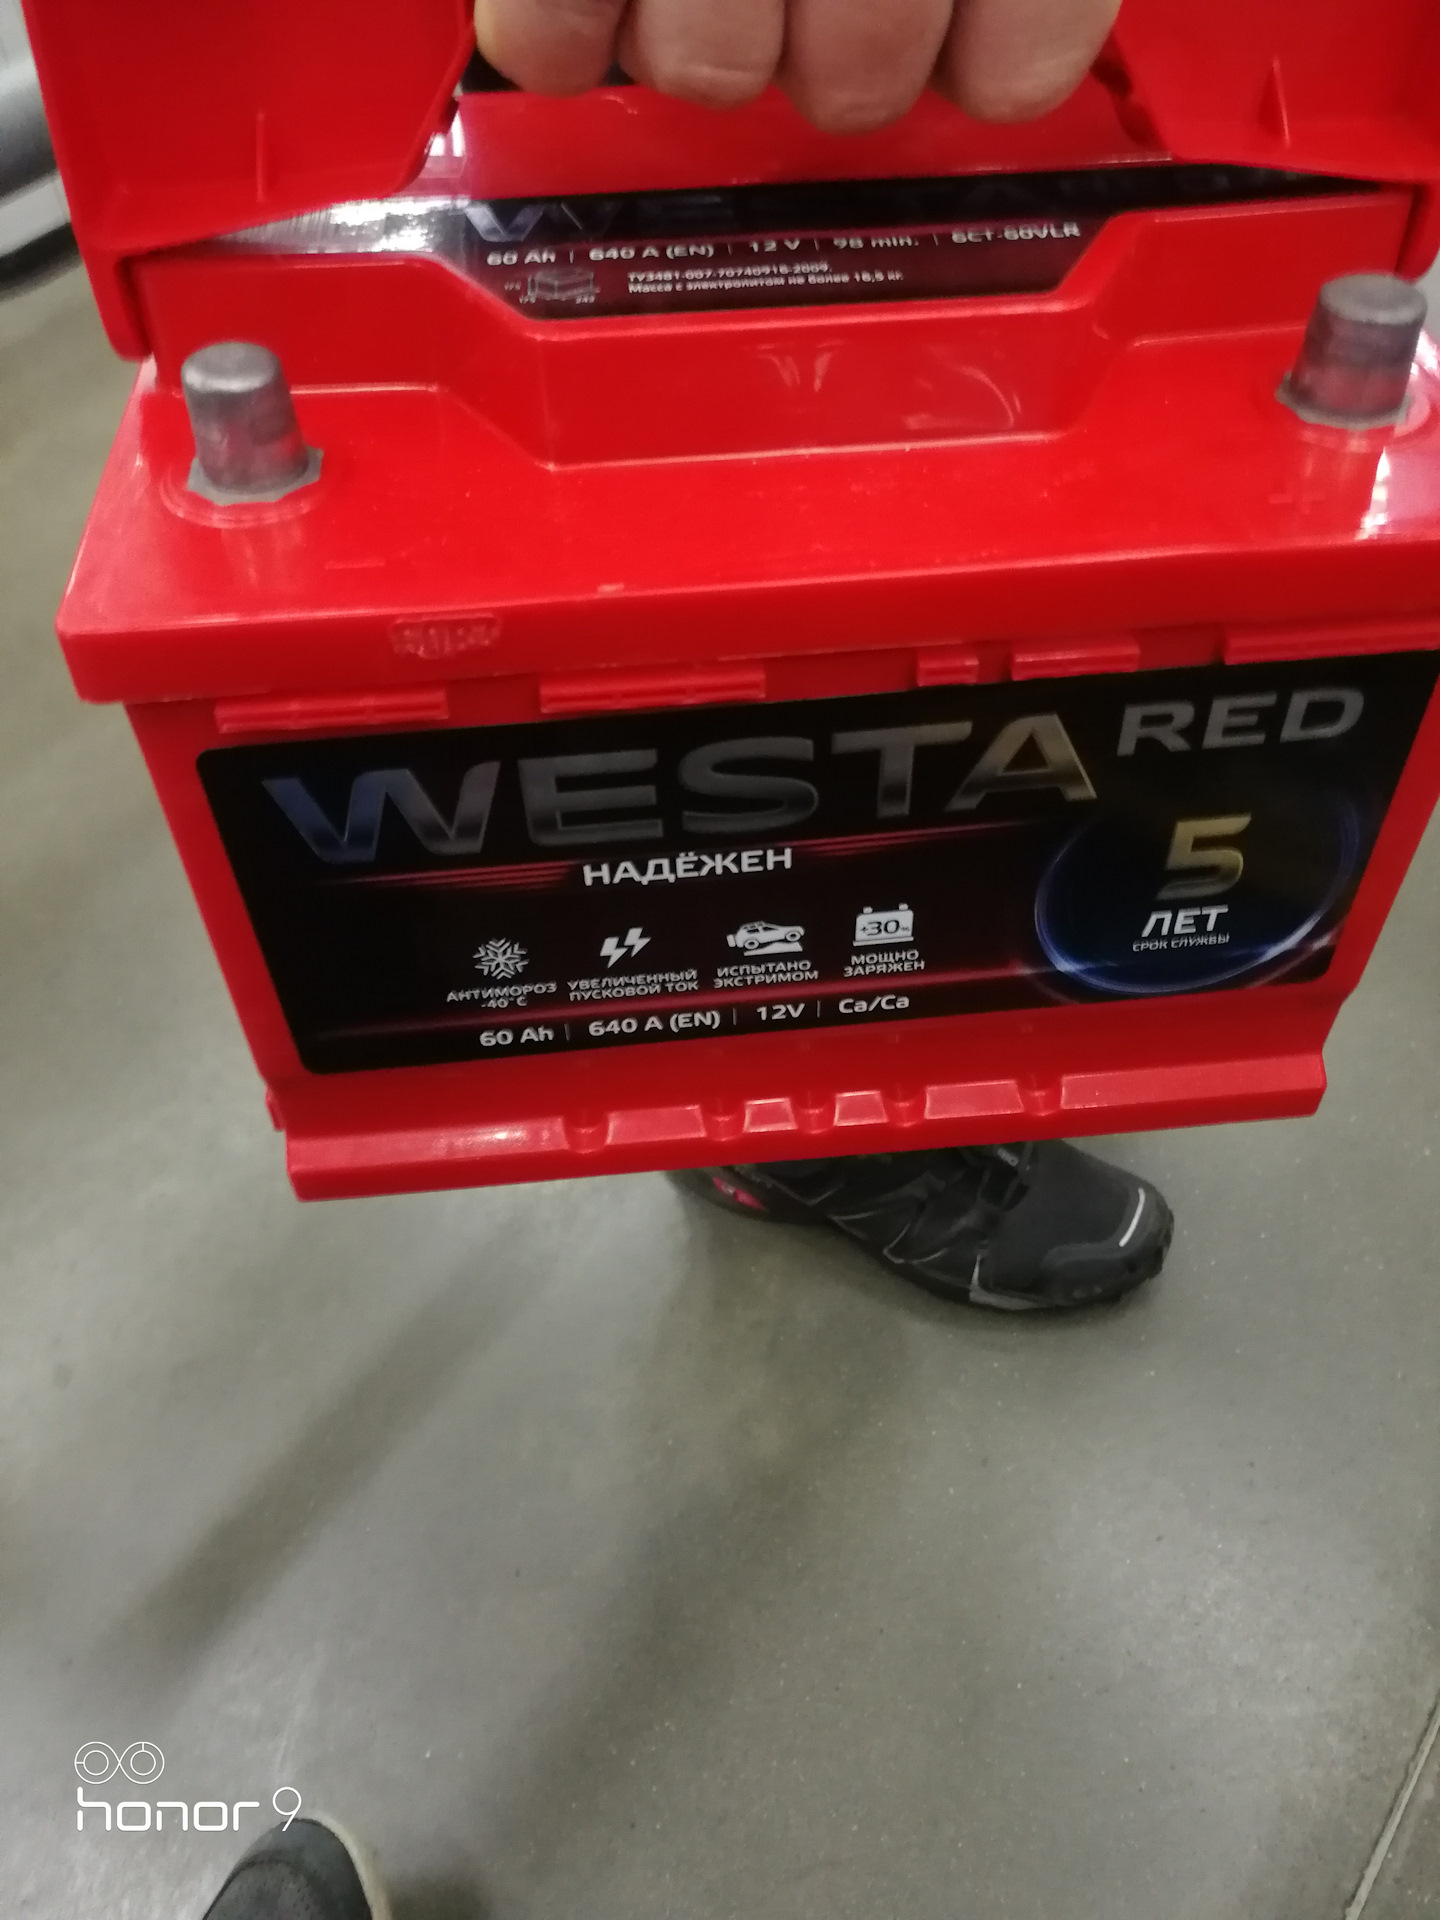 Аккумулятор vesta. Аккумулятор автомобильный Westa Red 60. Westa Red аккумулятор 60 Казахстан. Аккумуляторные батареи Westa Red 3.